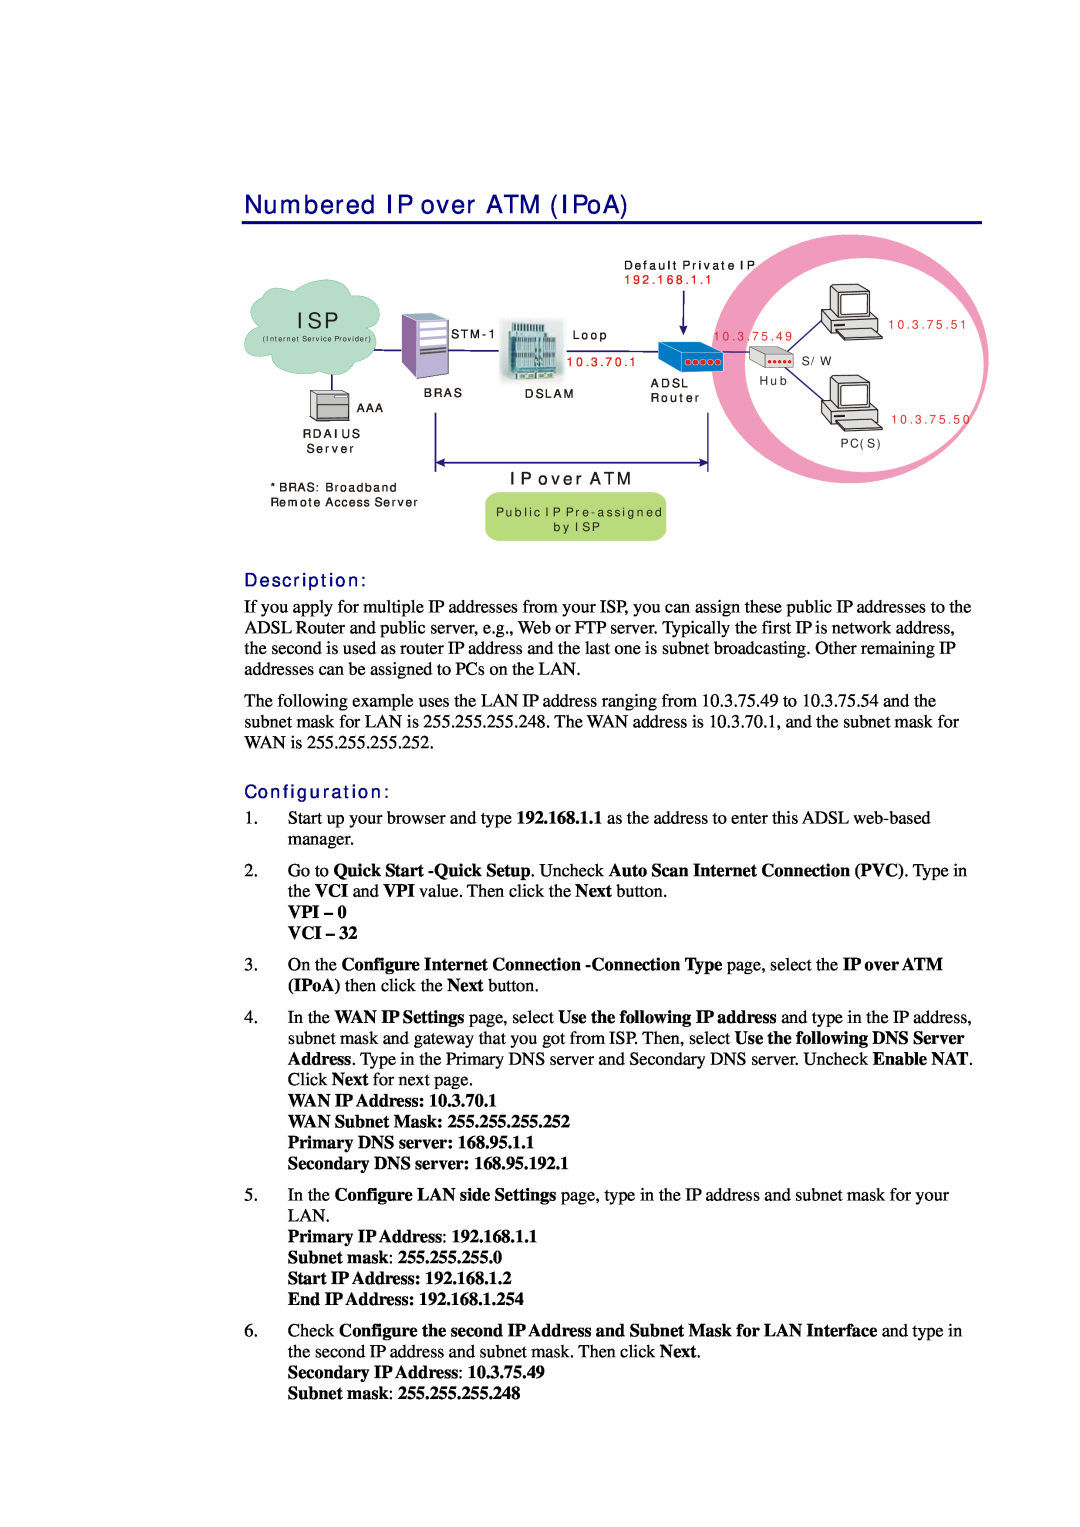 Siemens CL-010-I manual Numbered IP over ATM IPoA, Description, Configuration, VPI - 0 VCI, Secondary DNS server 